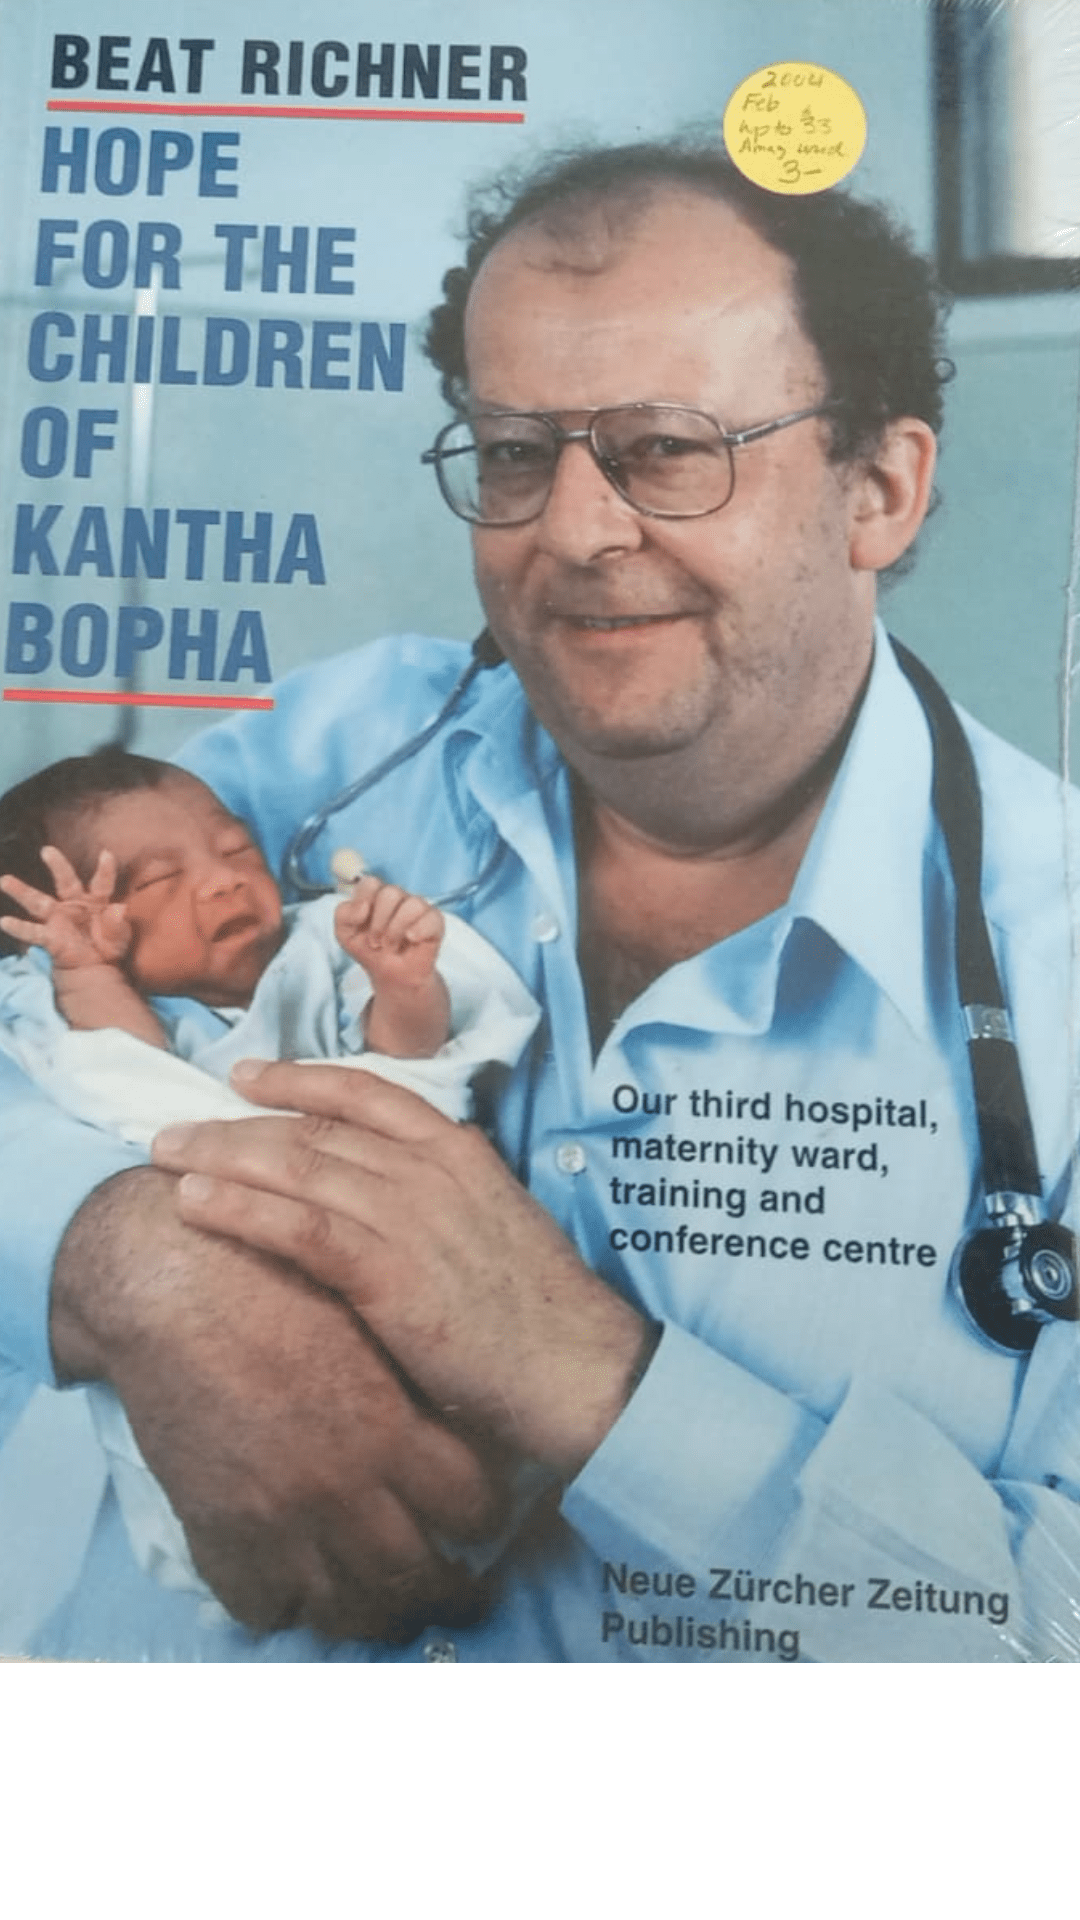 Hope for the Children of Kantha Bopha